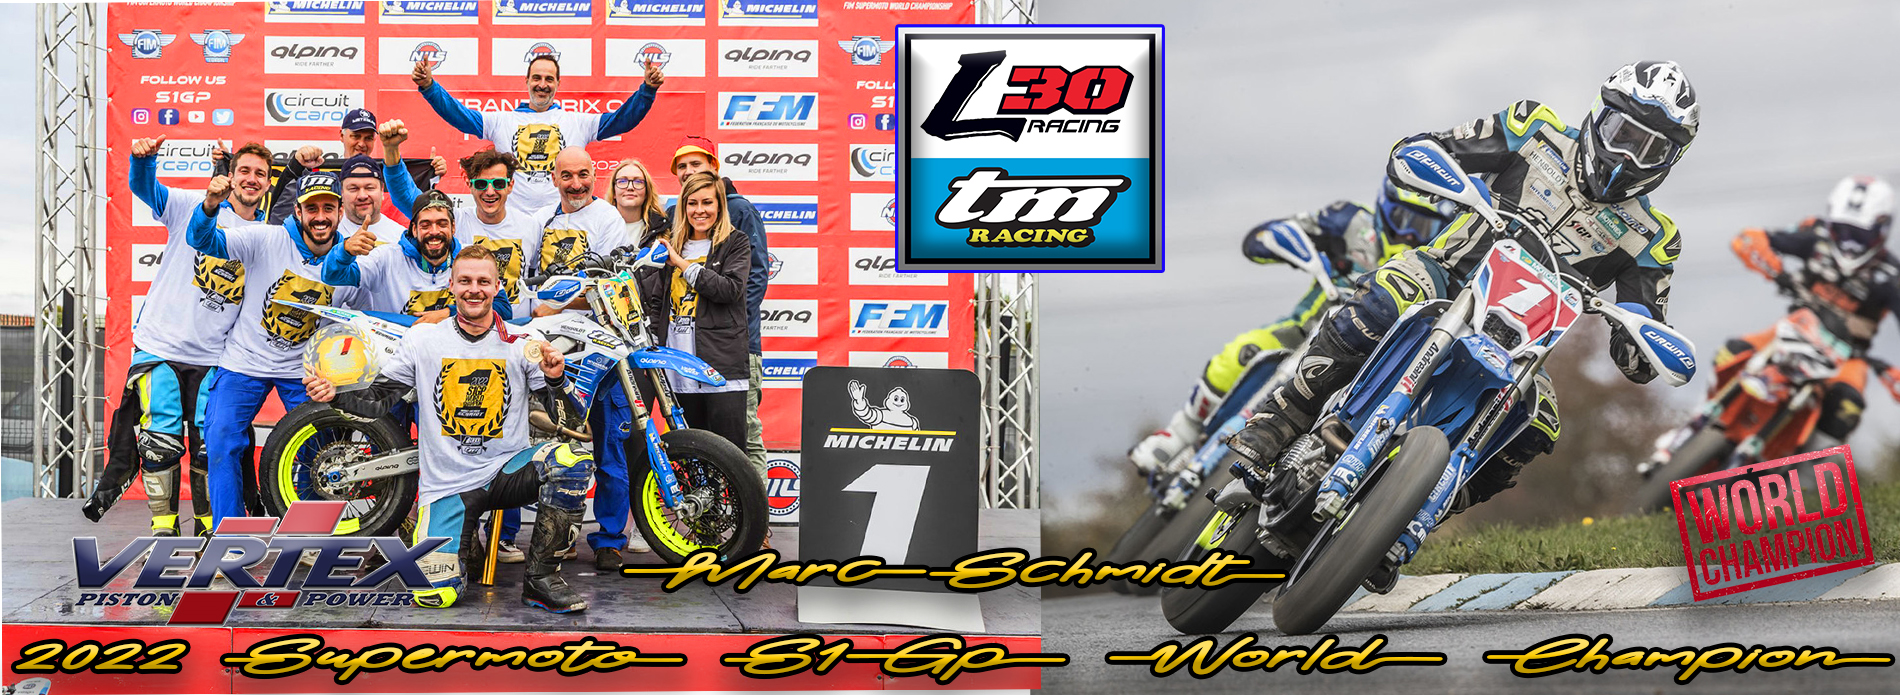 Vertex & Tm L30 & Matt Marc Schmidt SuperMoto S1Gp 2022 World Champion